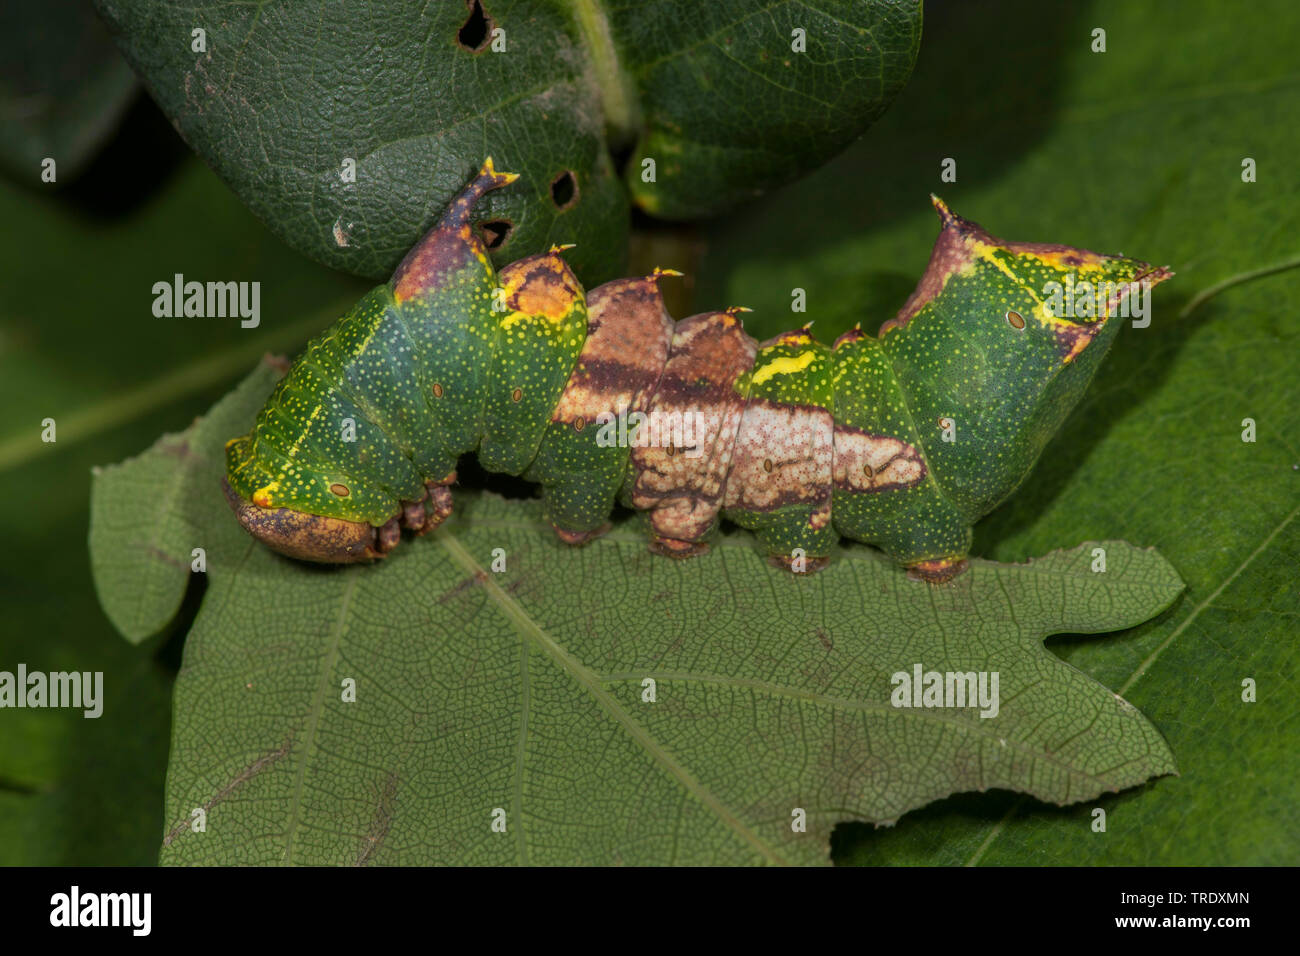 Tawny Harpyia milhauseri, Prominente (Hybocampa milhauseri, Hoplitis milhauseri), Caterpillar, Deutschland Stockfoto